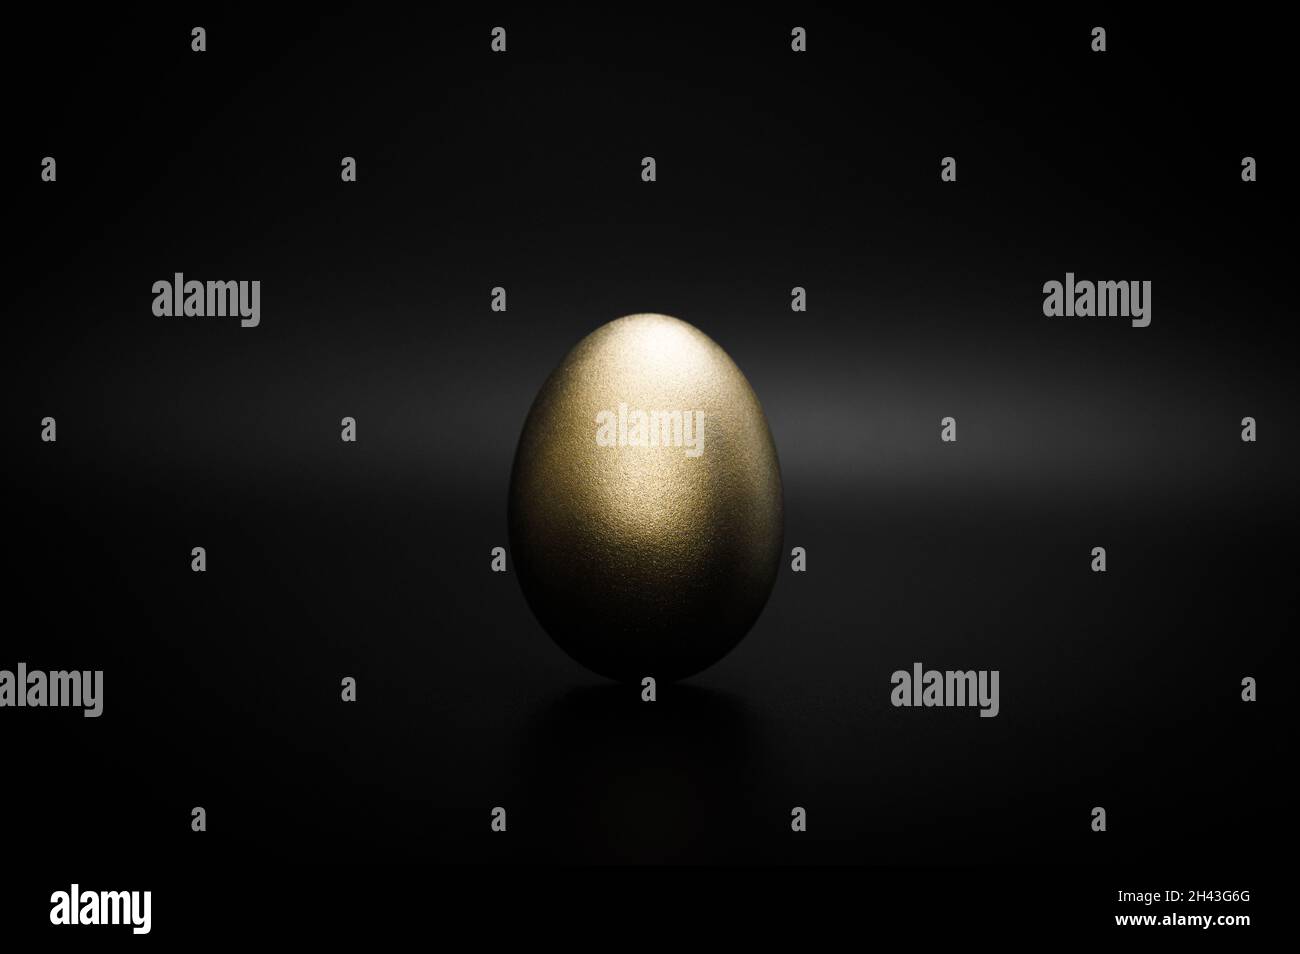 Golden egg against black background Stock Photo - Alamy